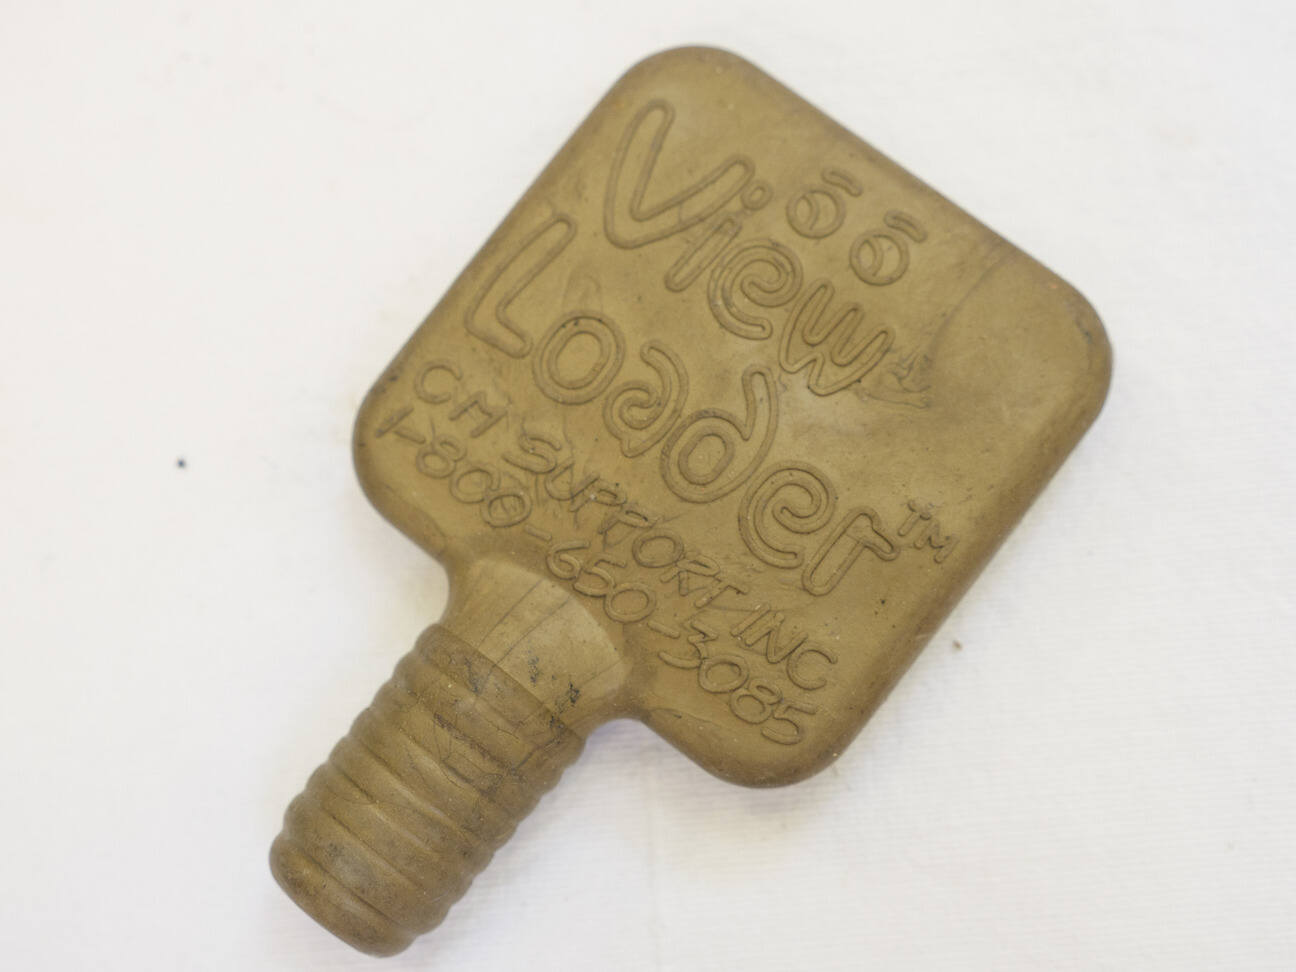 Viewloader Gold soft plastic barrel plug, used